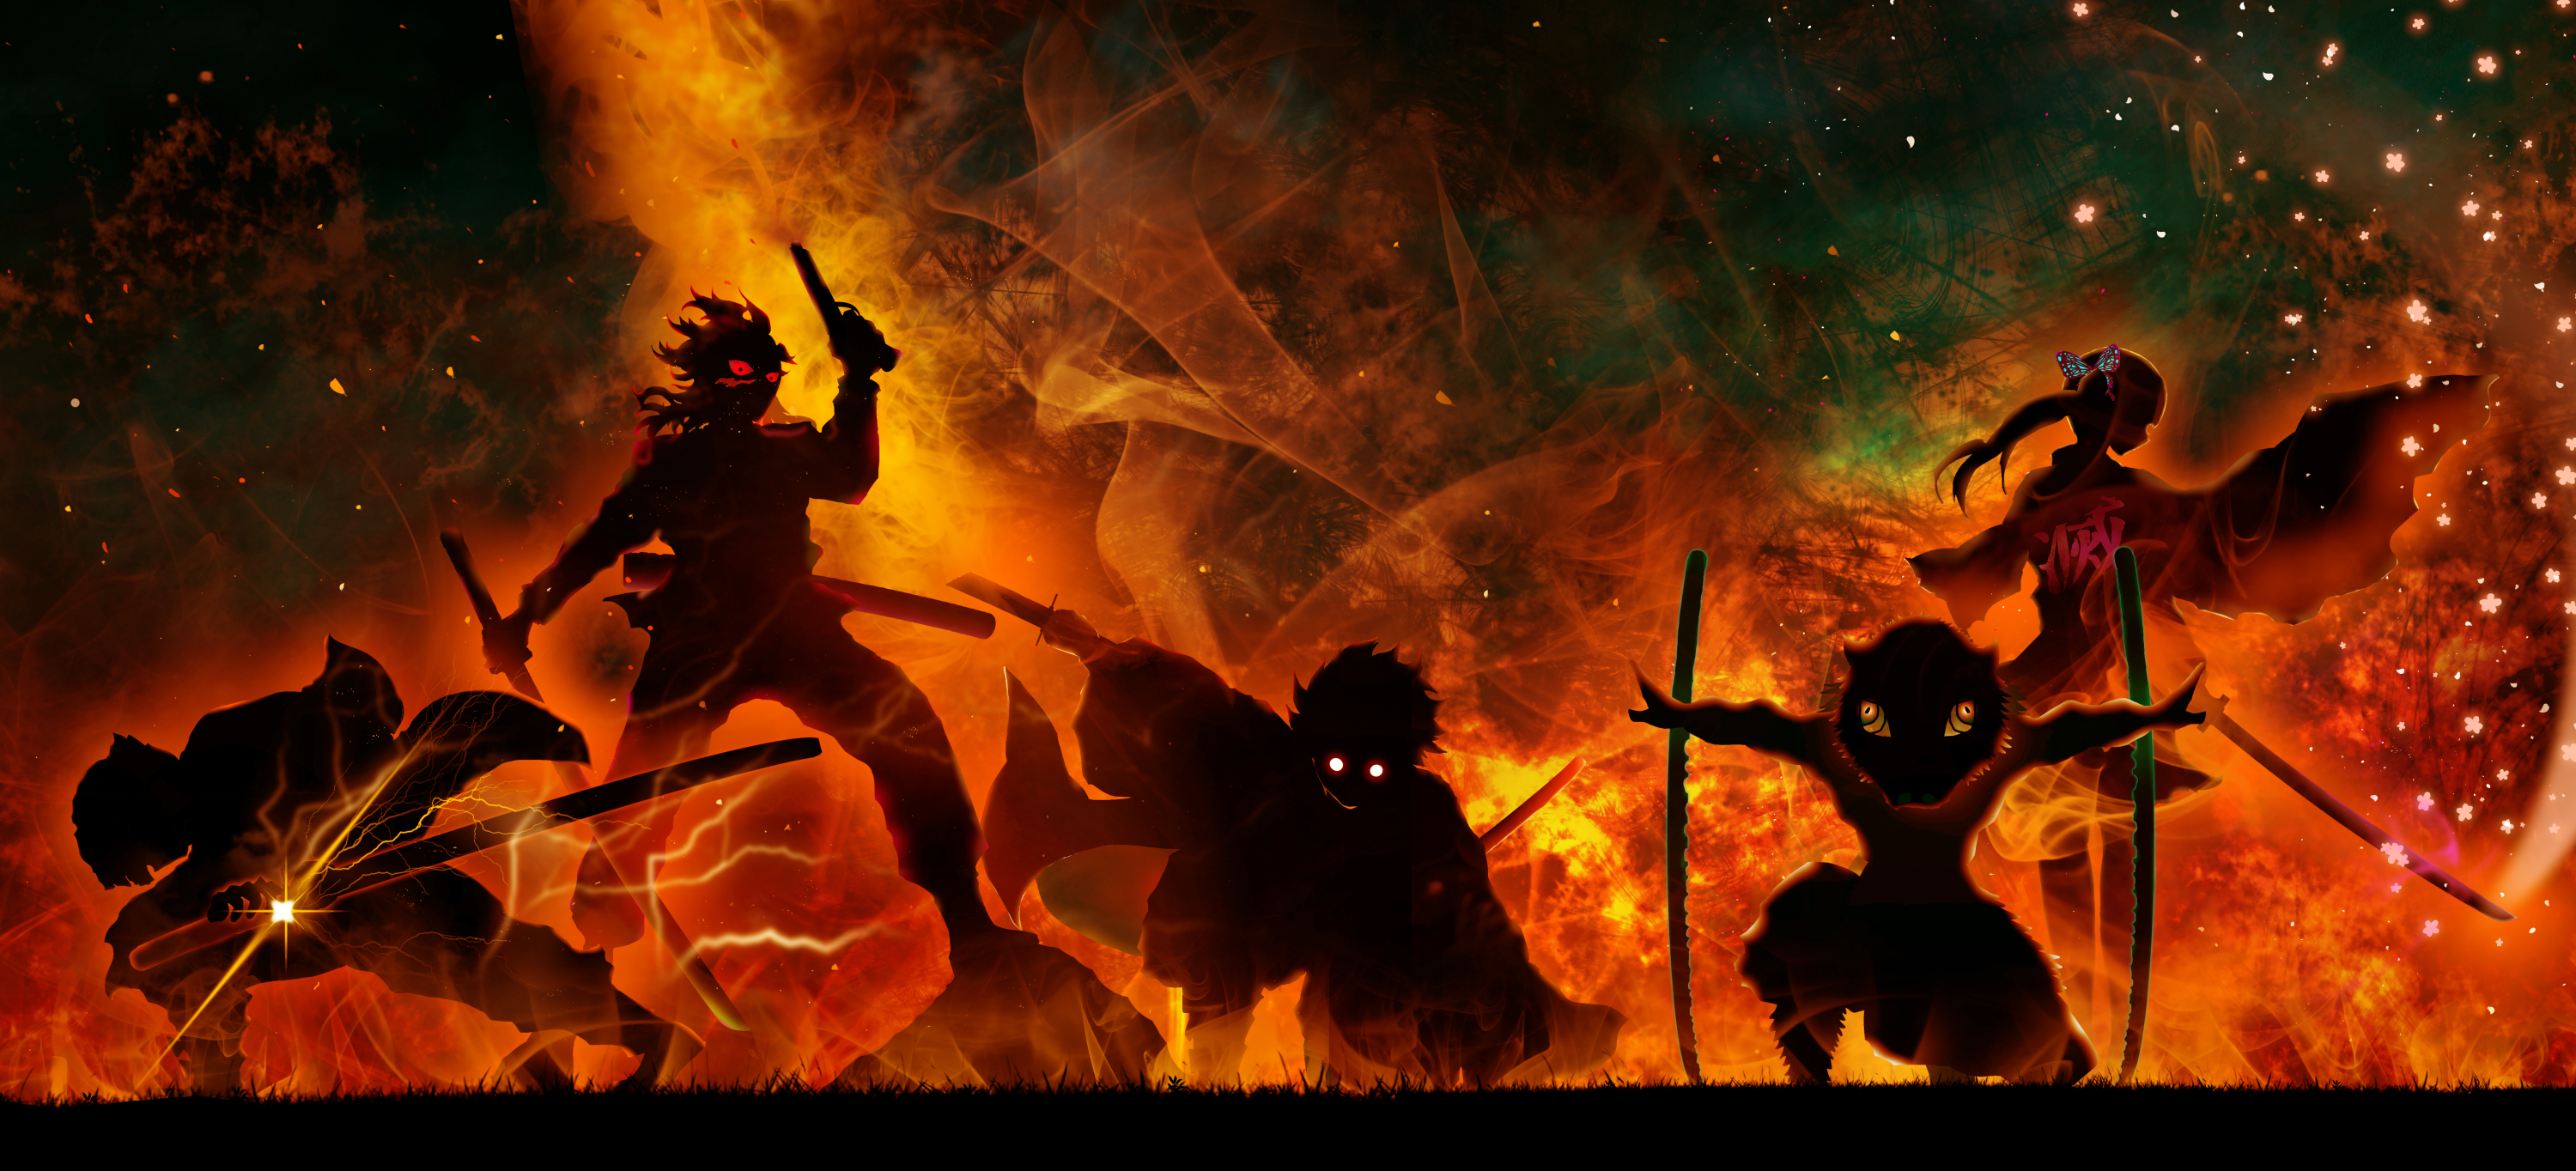 Demon Slayer Art Wallpaper, HD Anime 4K Wallpapers, Images ...